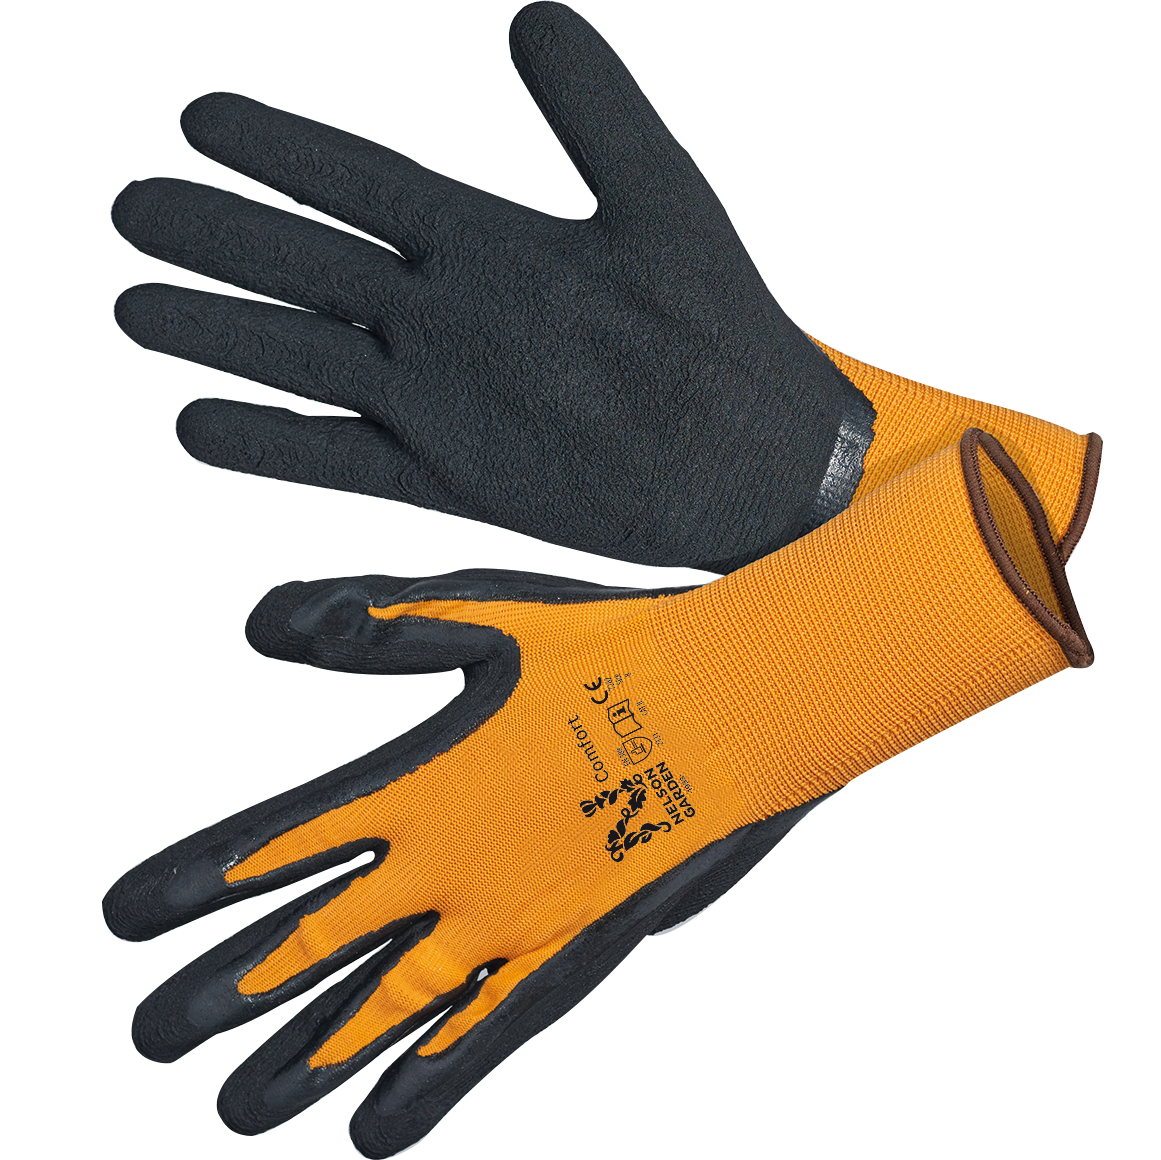 Handske Comfort, orange/svart stl 9